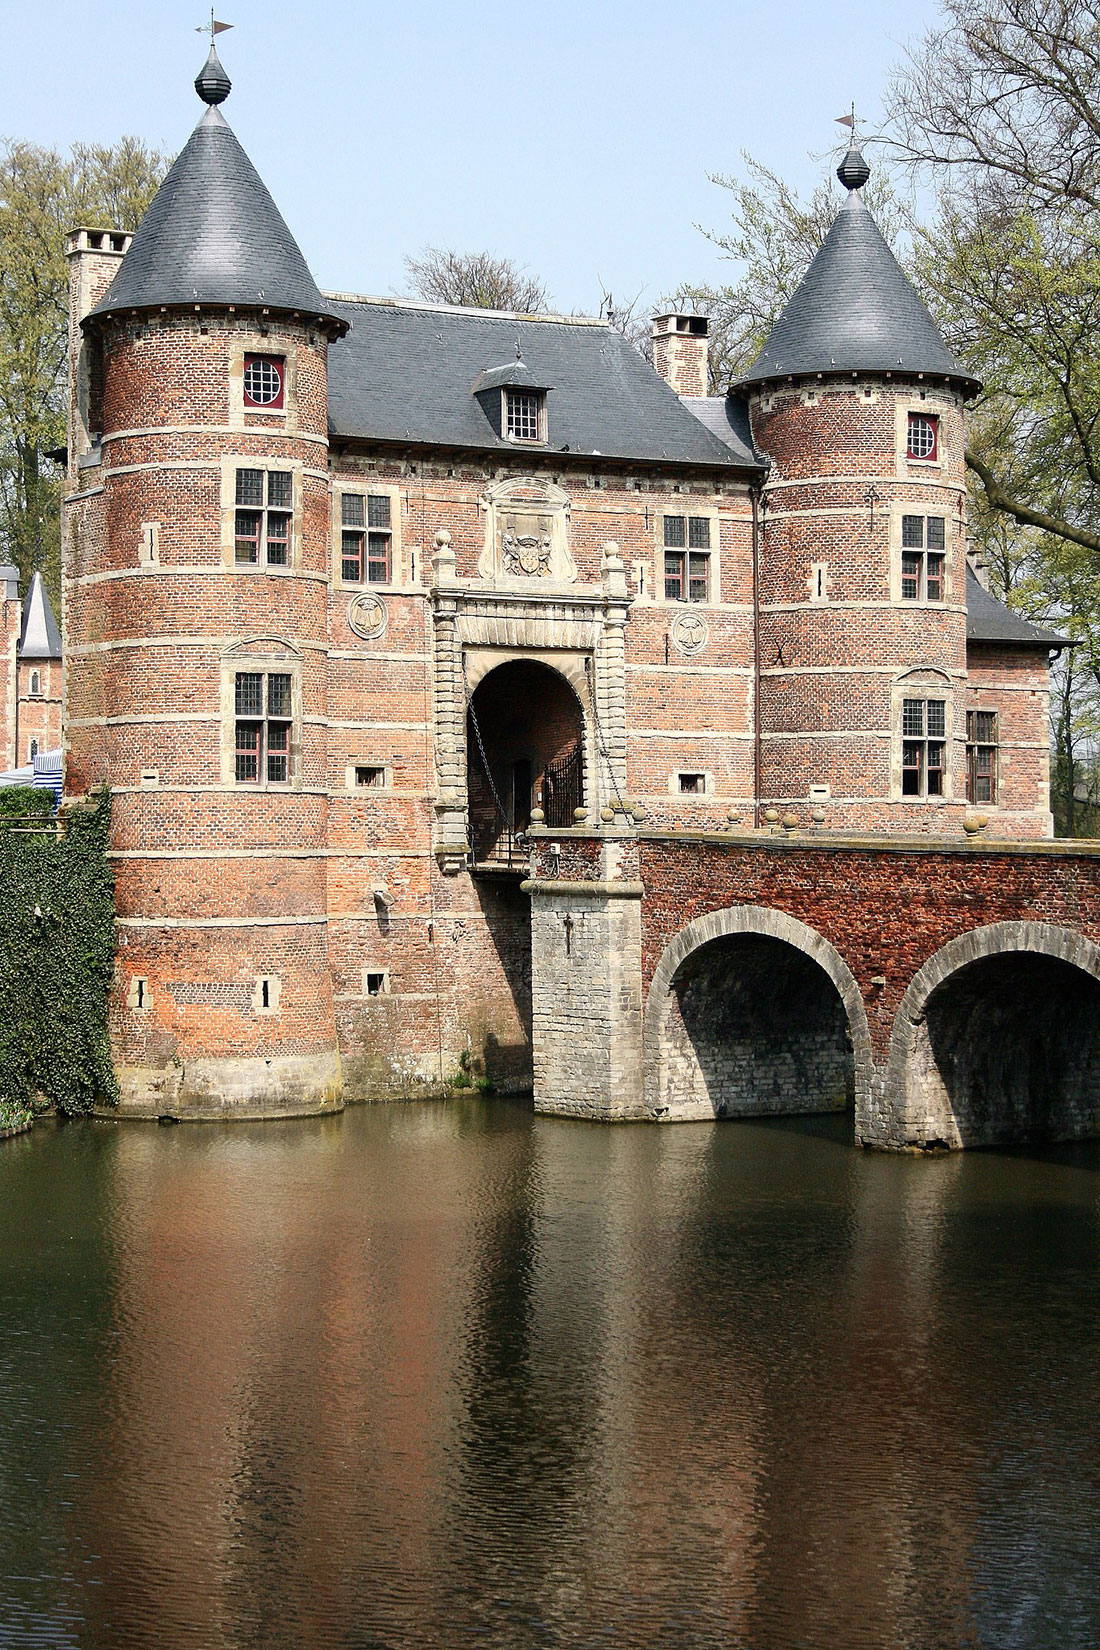 The bridge and entrance gate of Groot Bijgaarden Castle